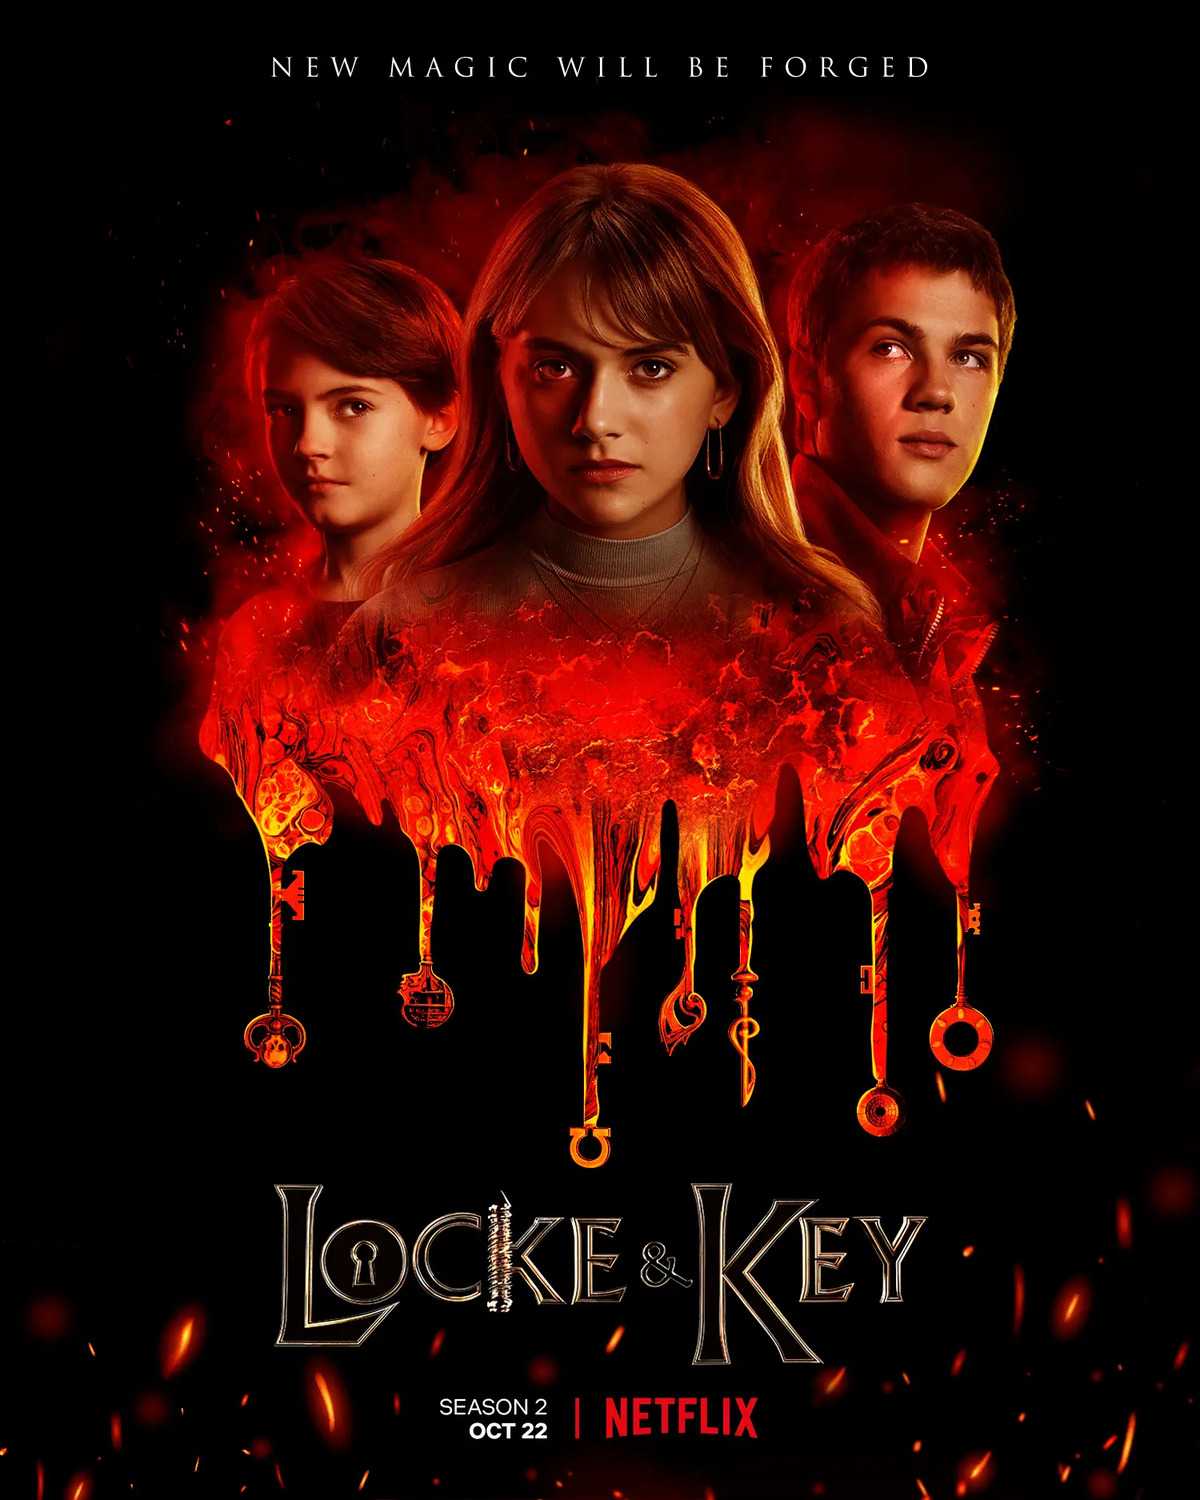 Locke & Key (2021) Season 2 ล็อคแอนด์คีย์ ปริศนาลับตระกูลล็อค ซีซั่น 2 ตอนที่ 1-10 ซับไทย